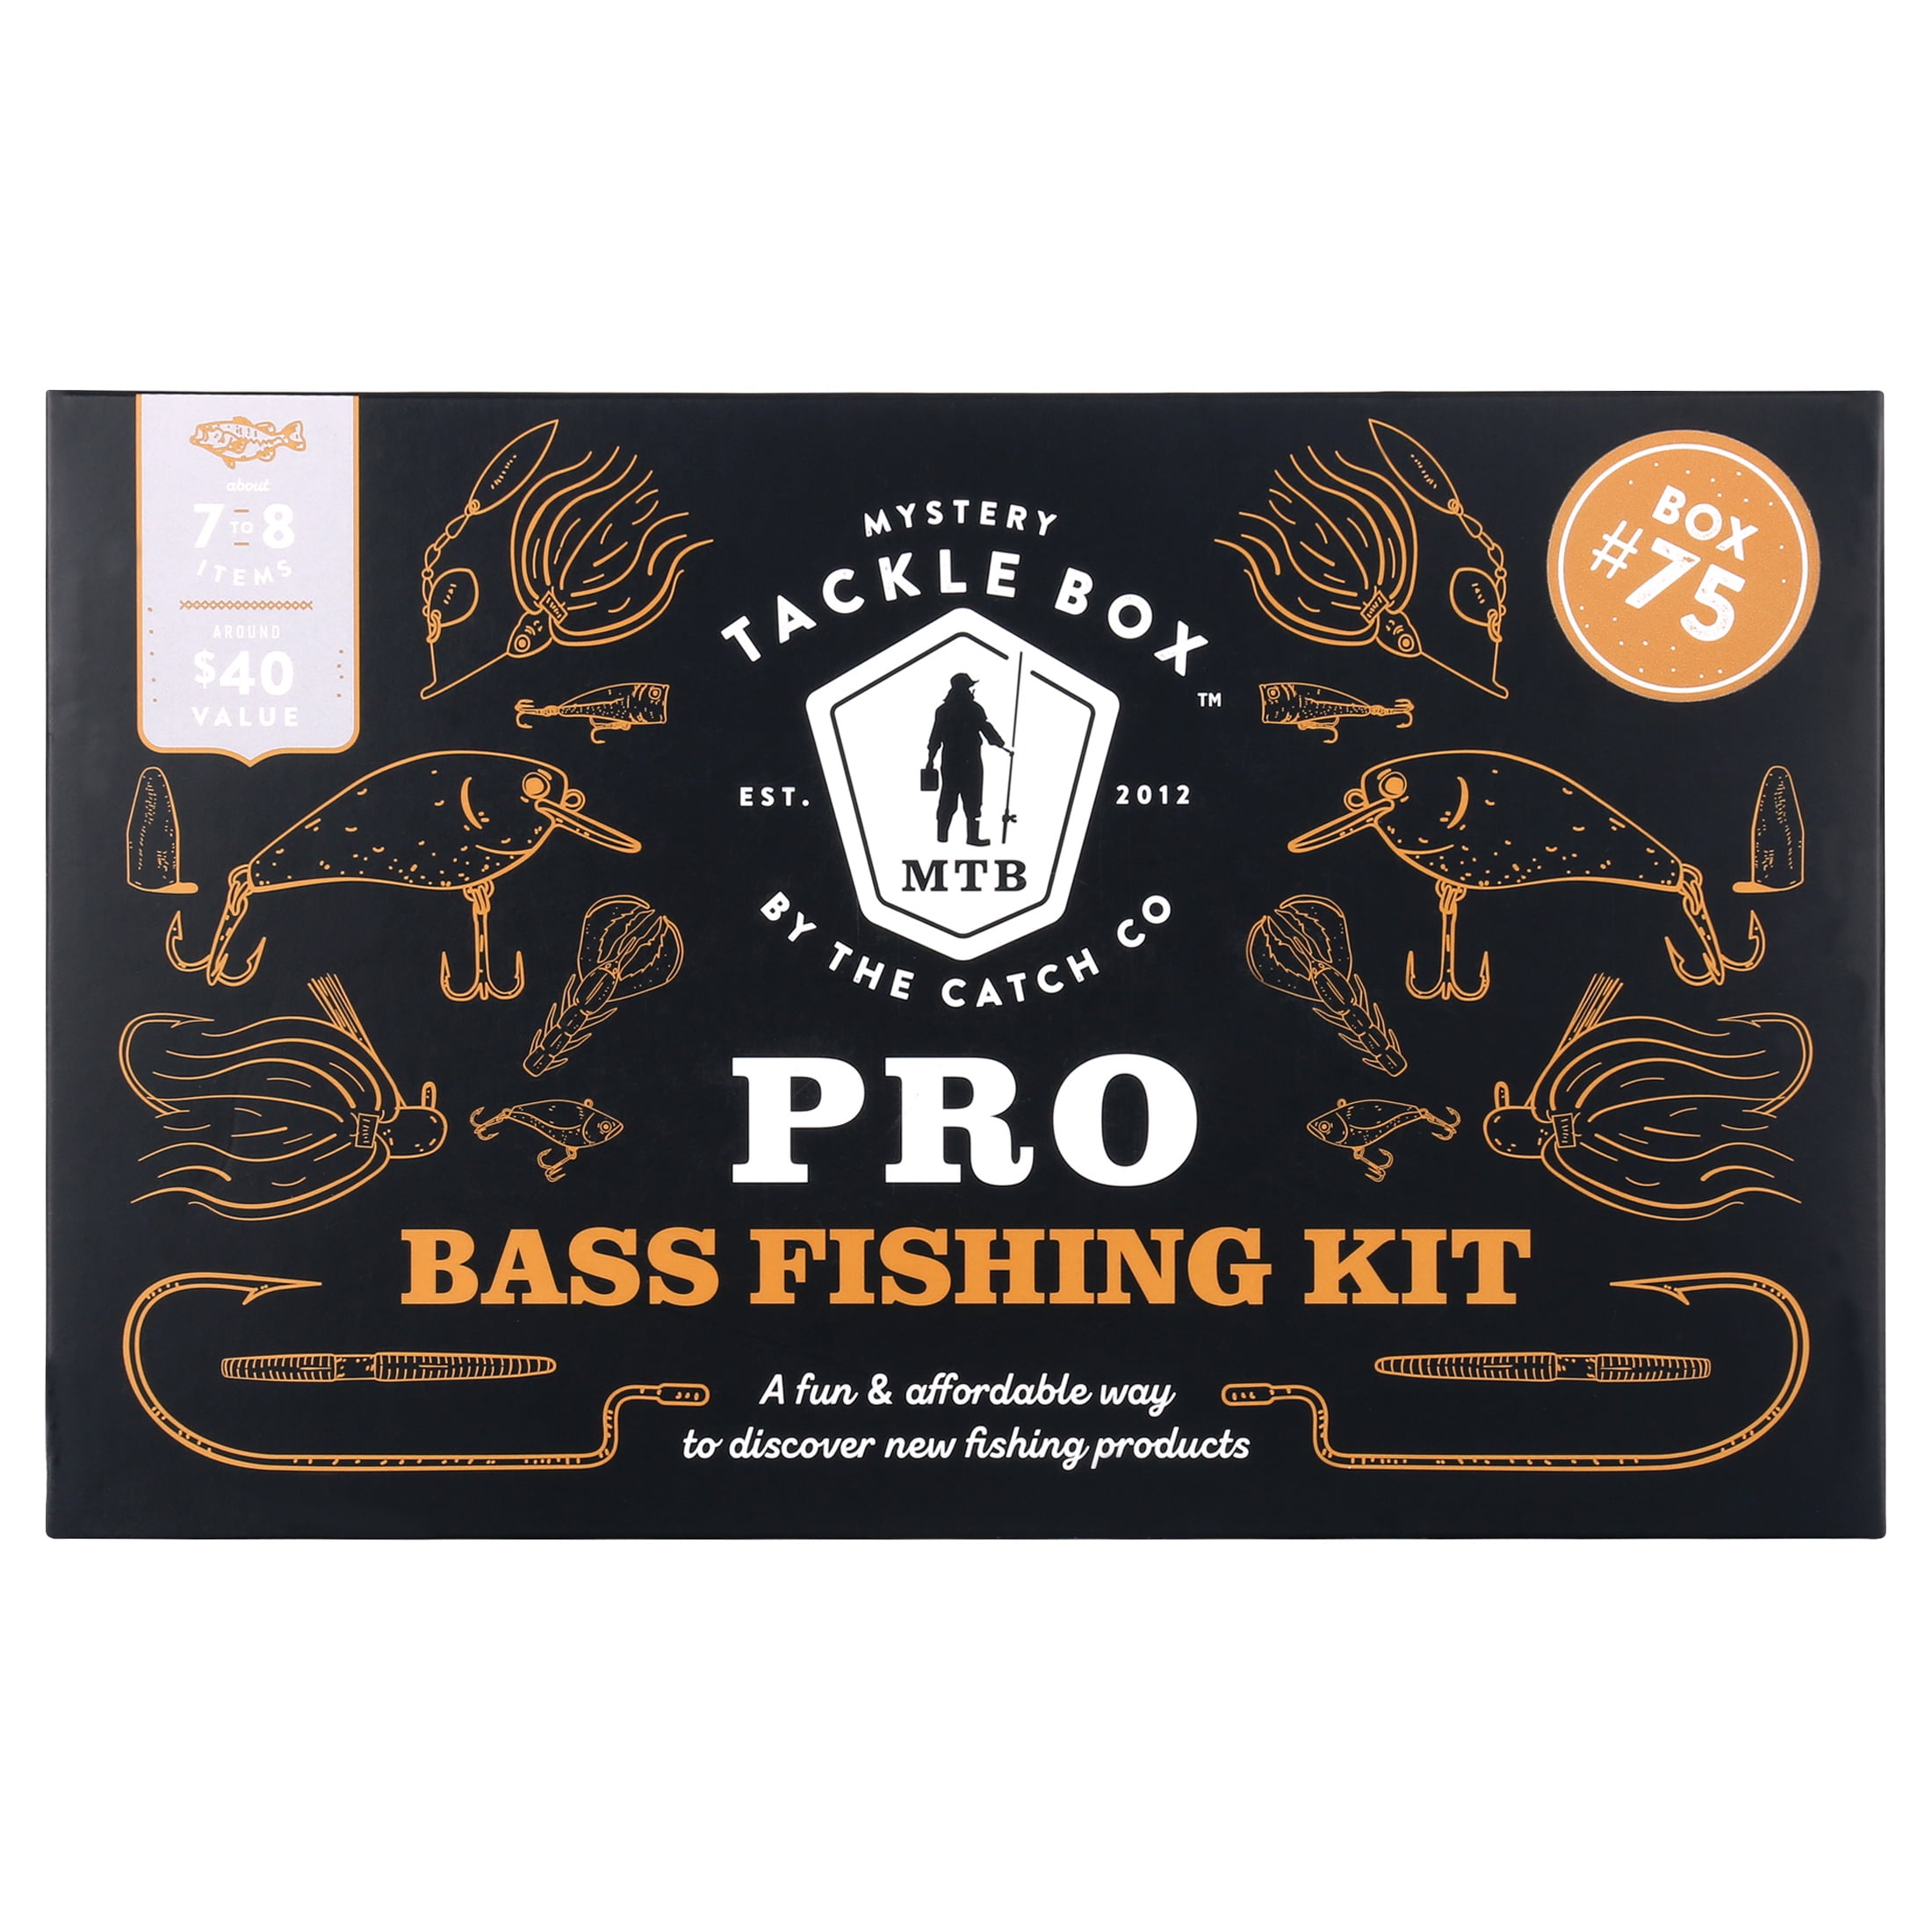 Mystery Tackle Box Bass Fishing Kit